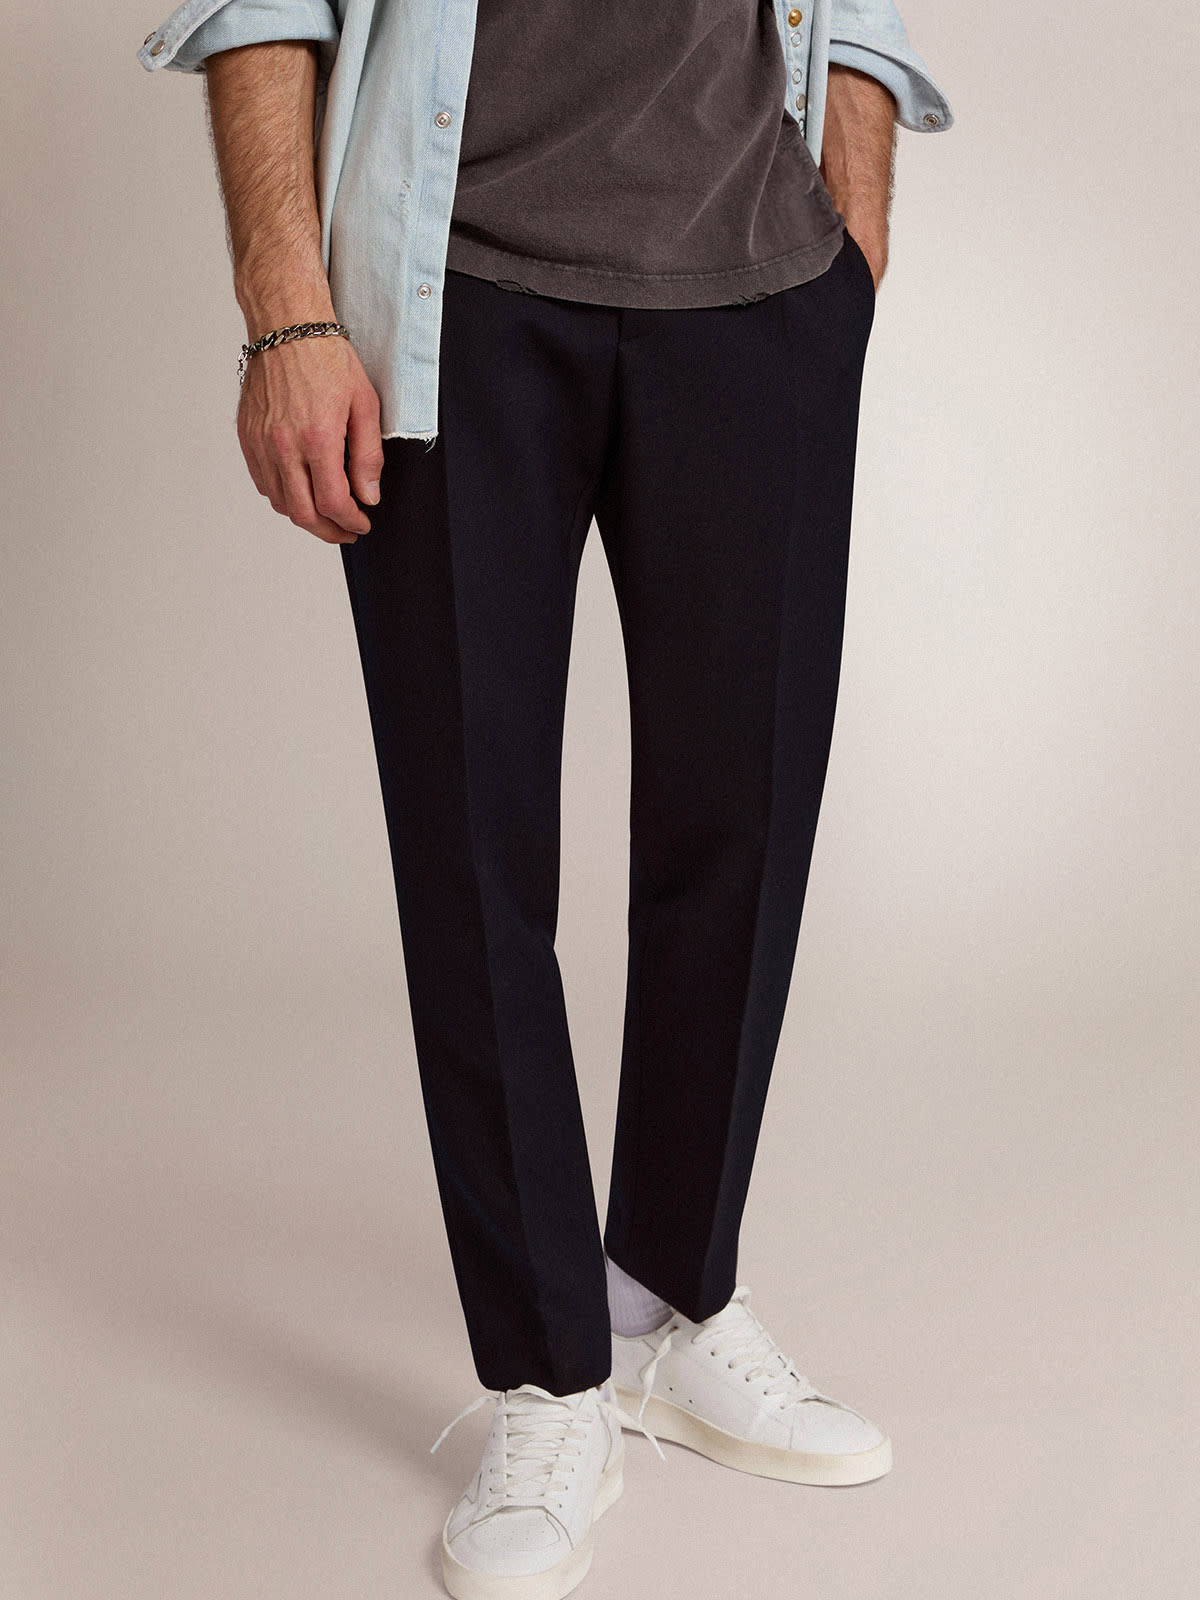 Golden Goose - Pantalone da uomo in lana di colore blu scuro in 